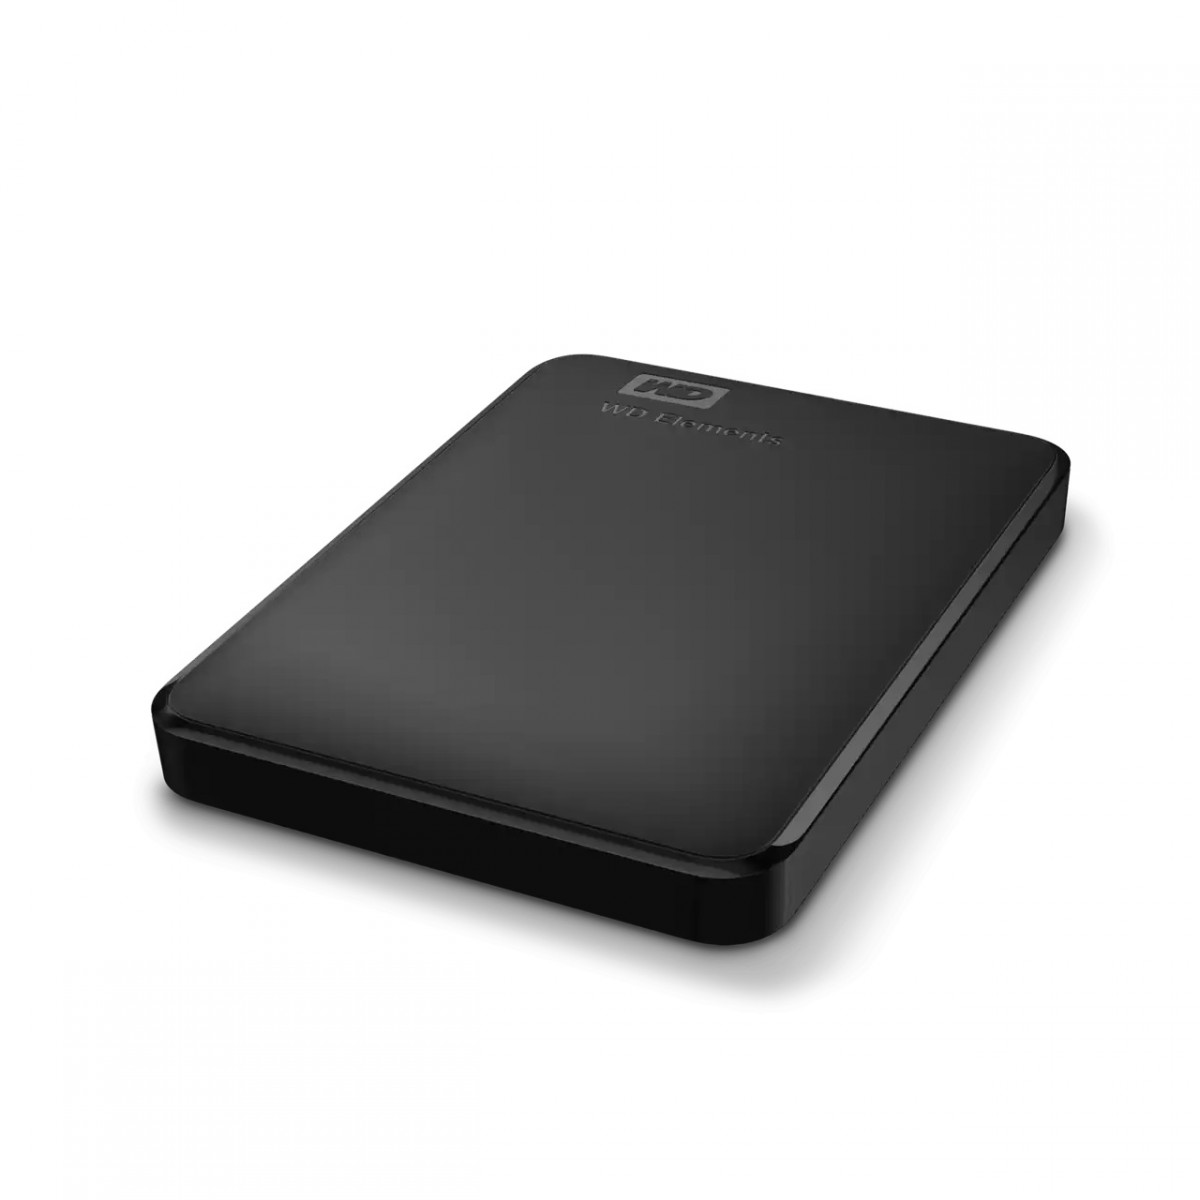 HD Externo WD Elements Portable 1TB, USB 3.0, Black, WDBUZG0010BBK